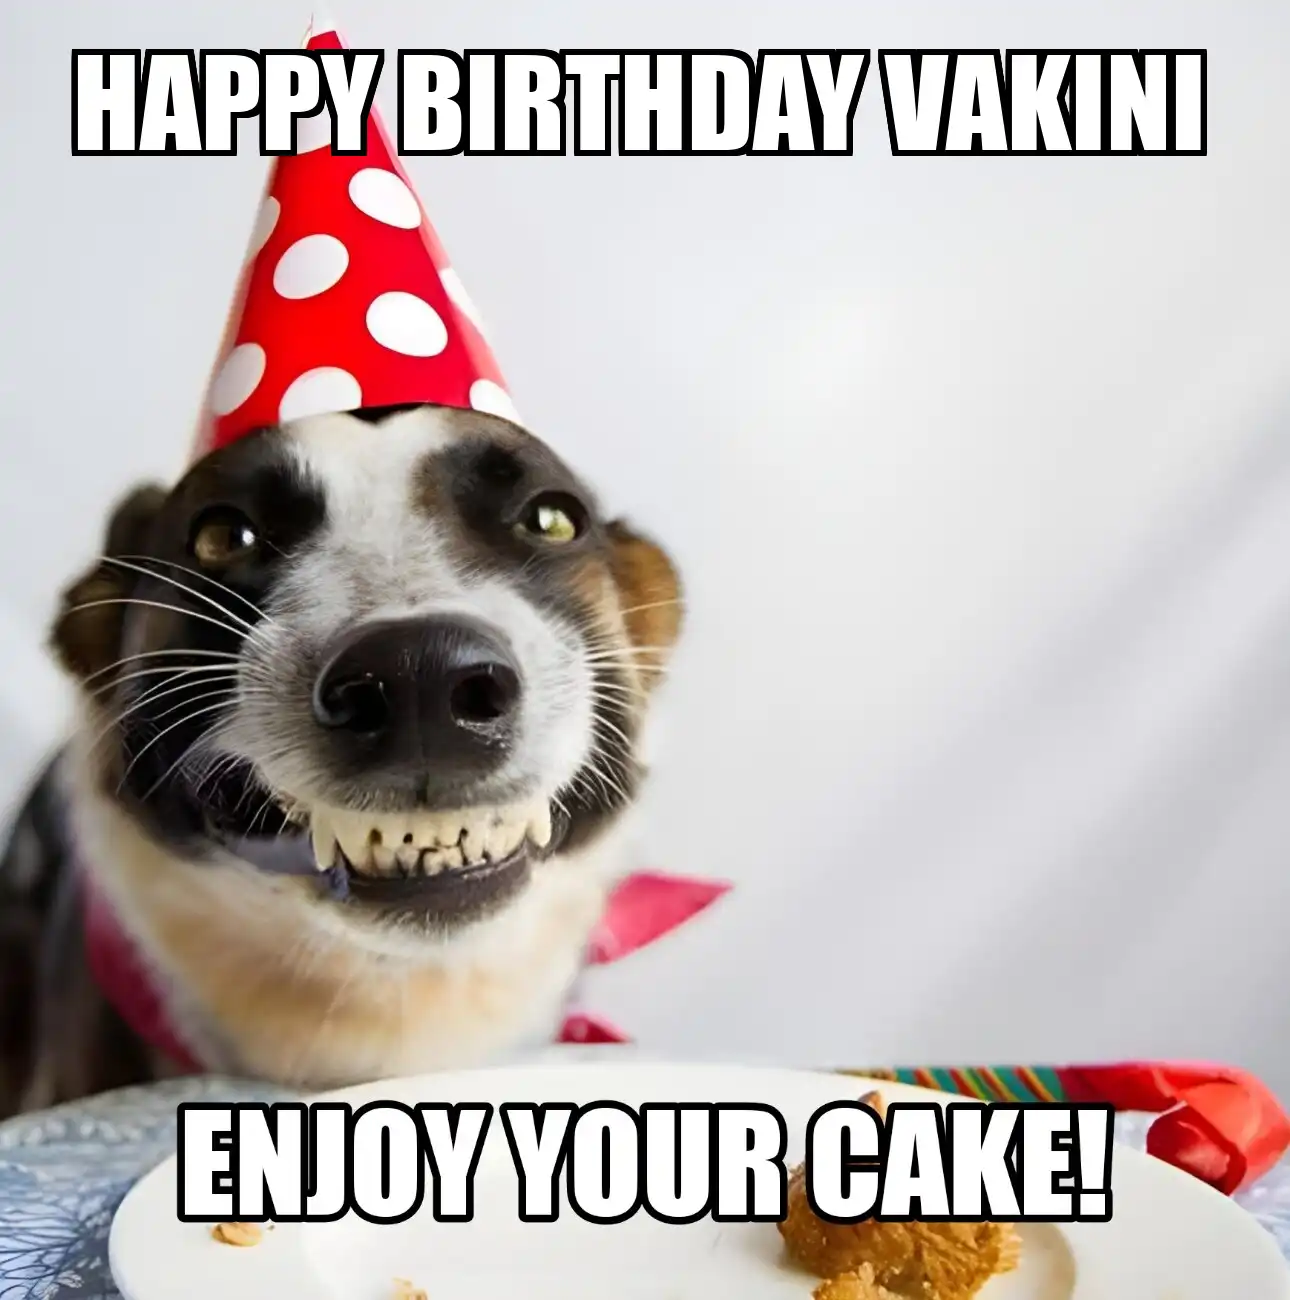 Happy Birthday Vakini Enjoy Your Cake Dog Meme